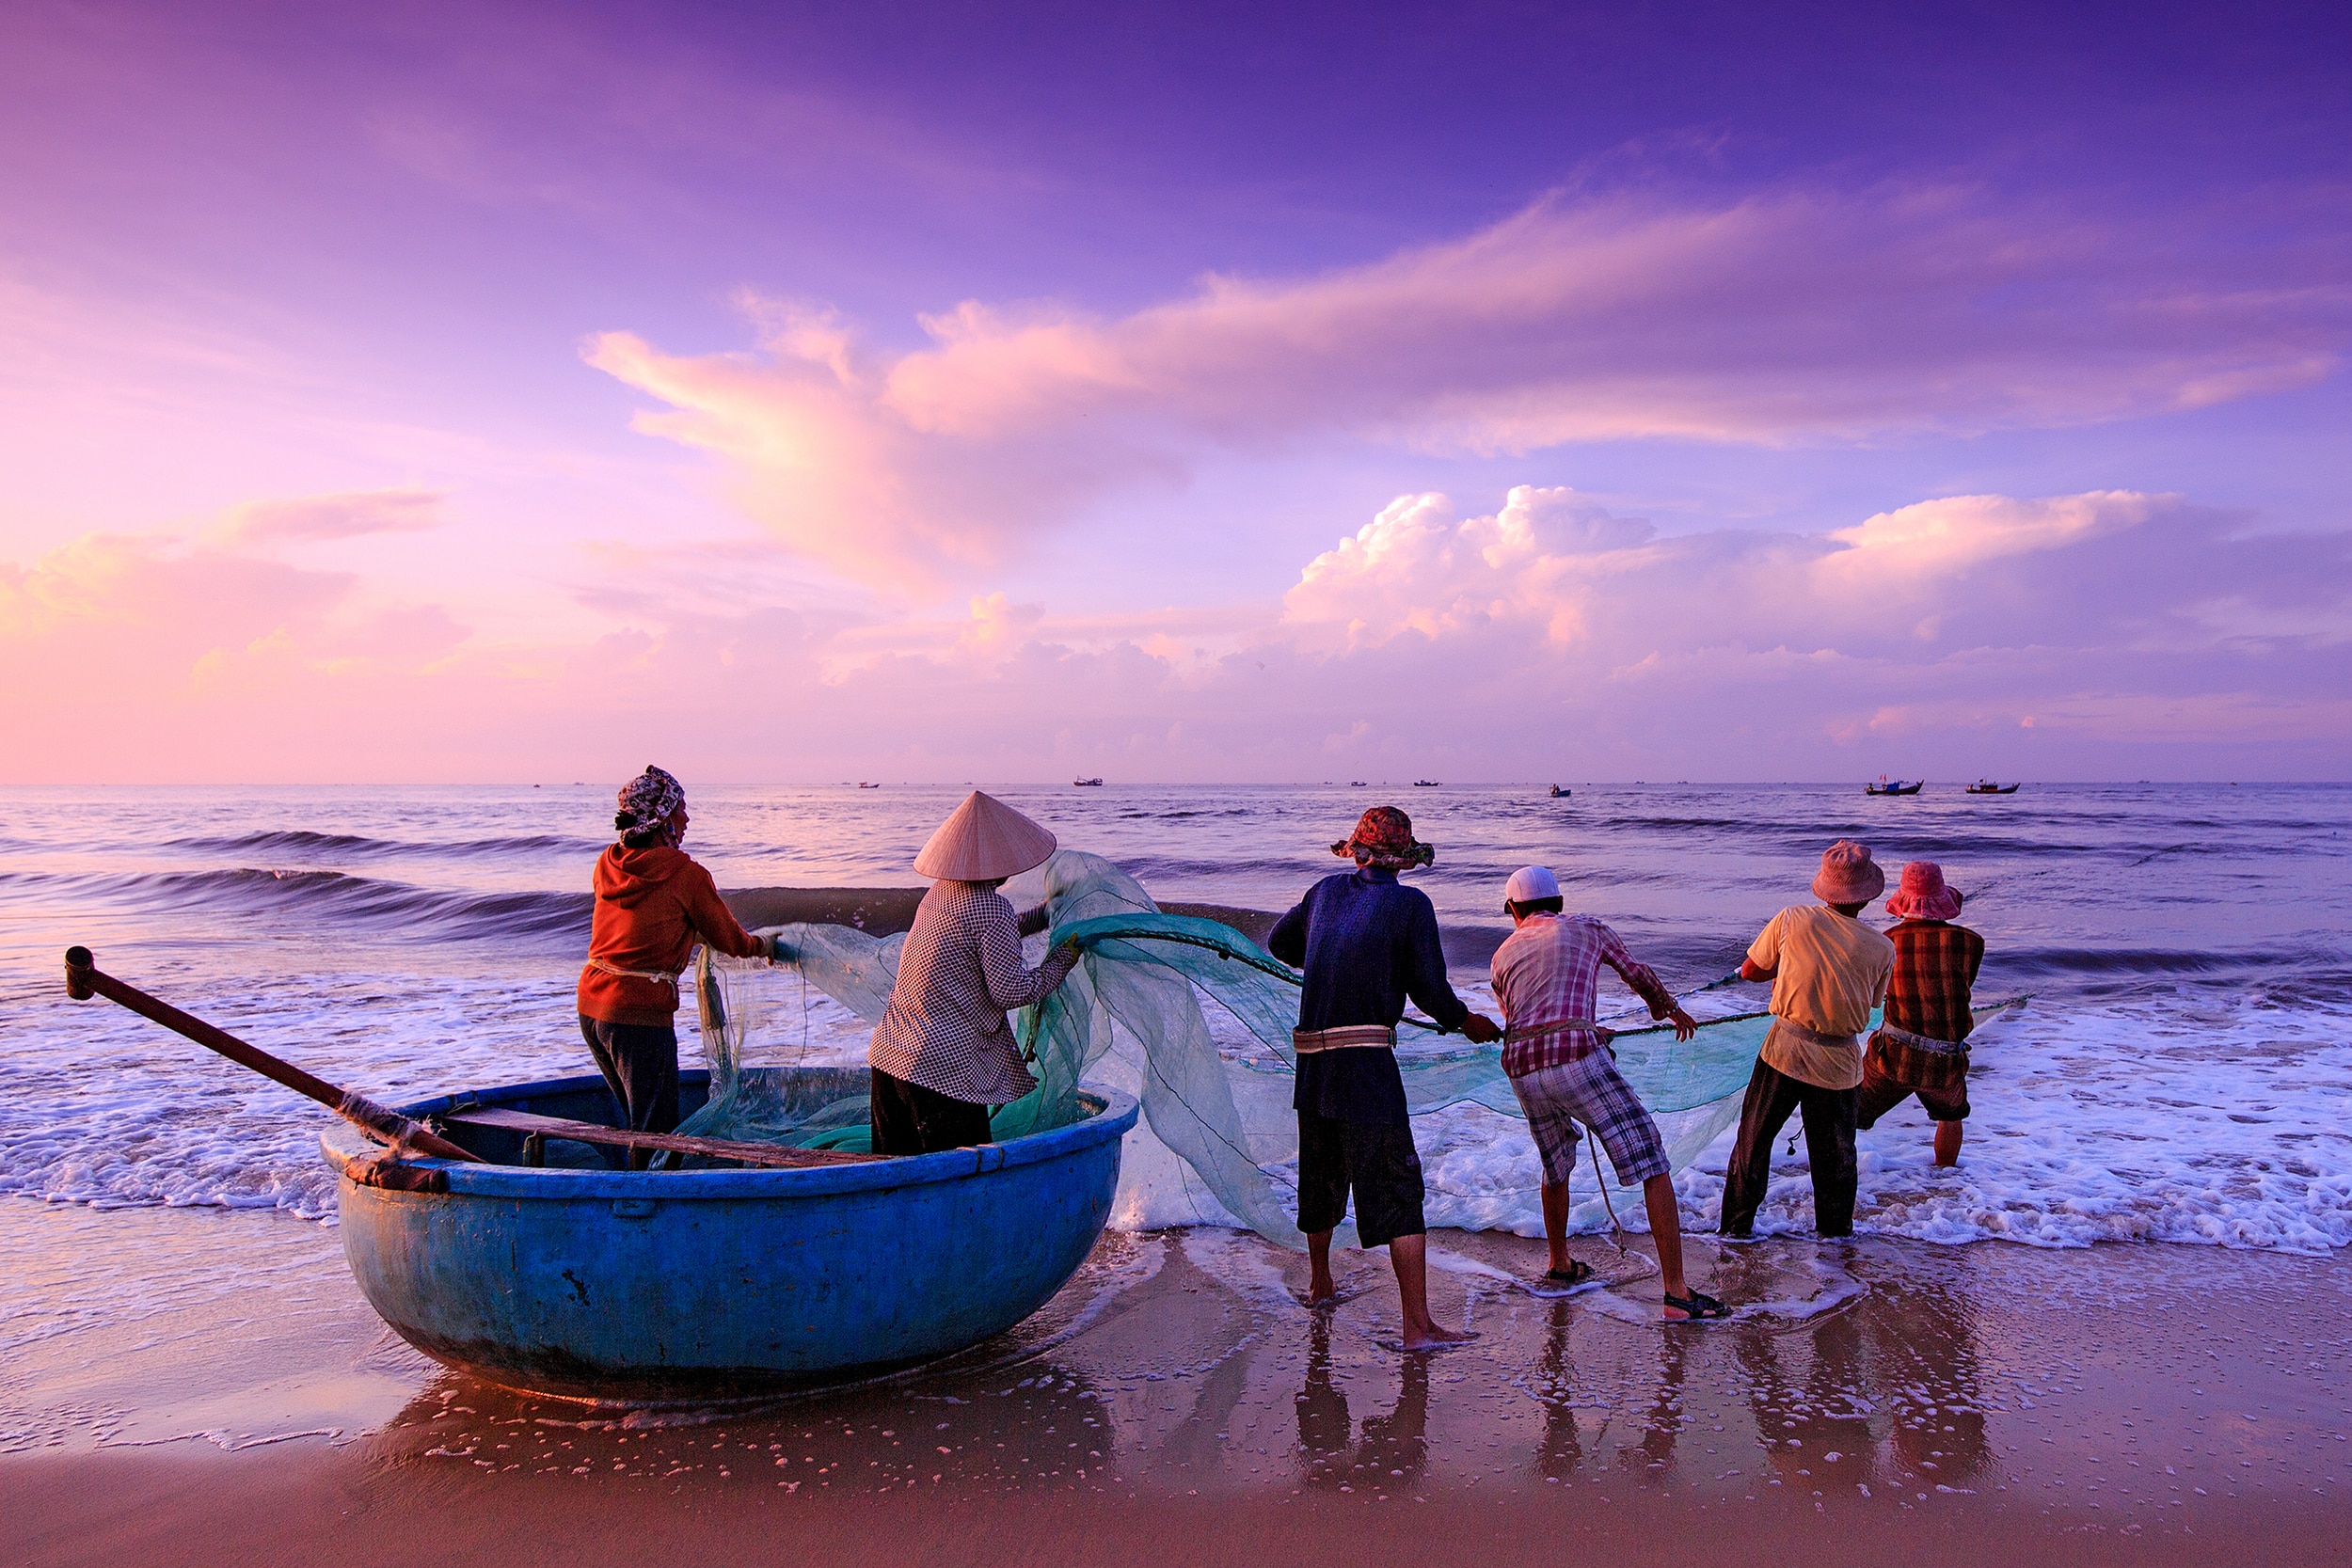 Fishermen casting a net in the sea